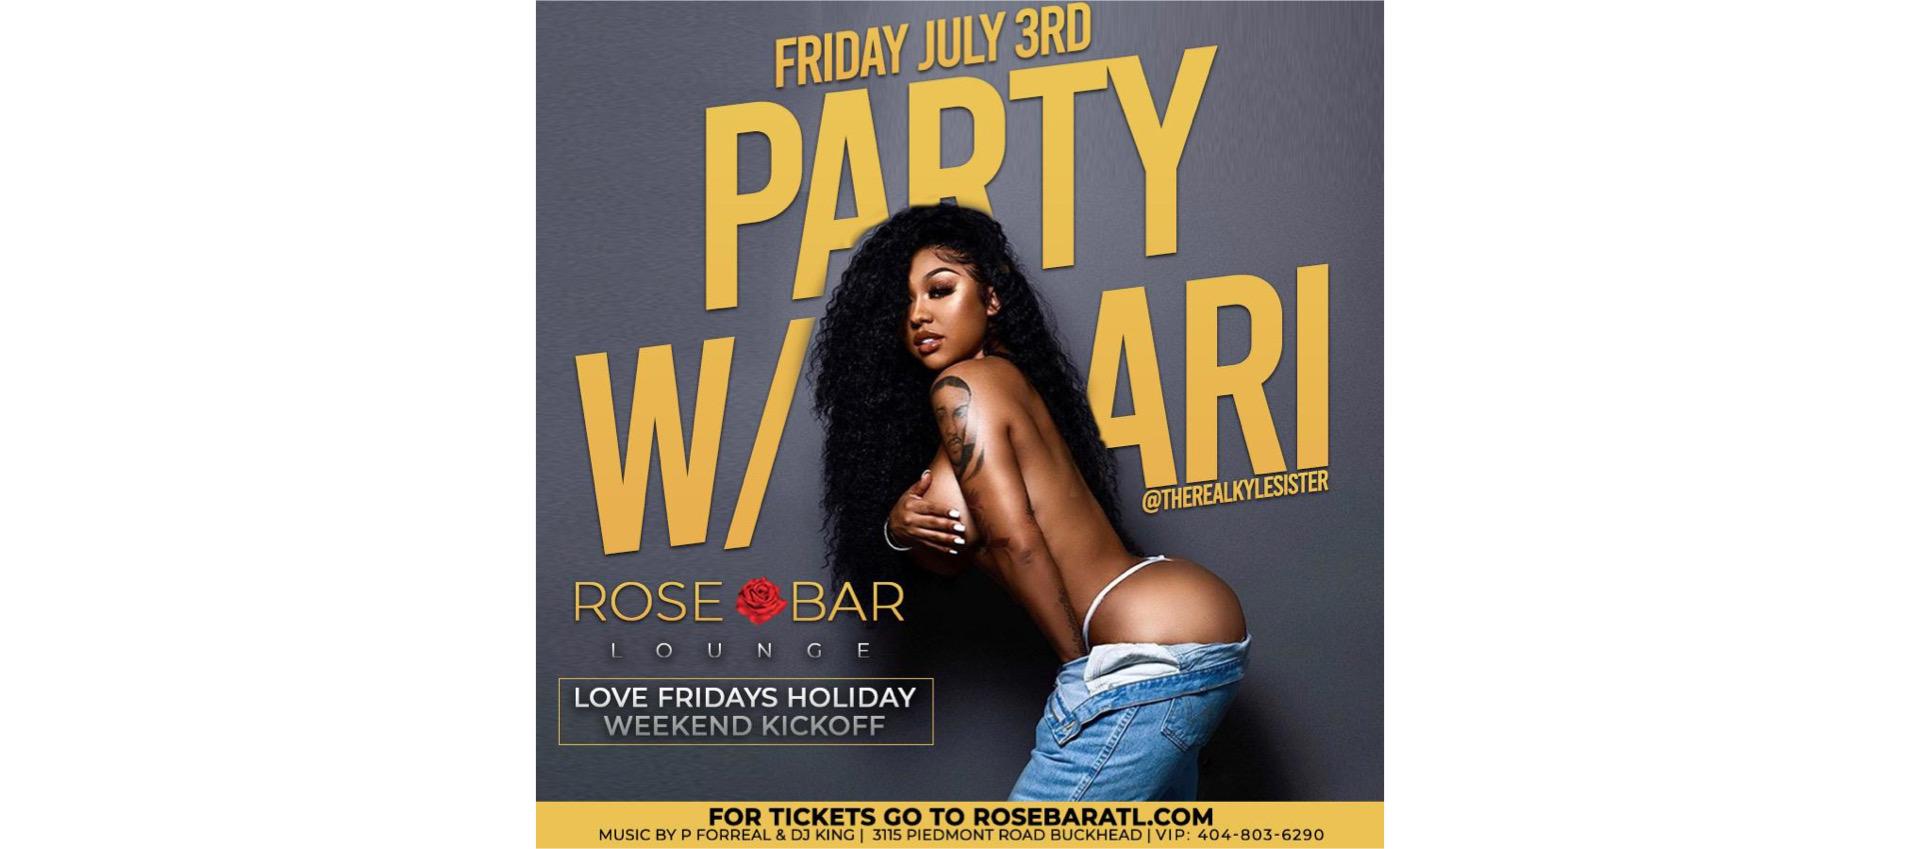 Rose Bar Atlanta | LOVE FRIDAYS - Party w/ Ari 